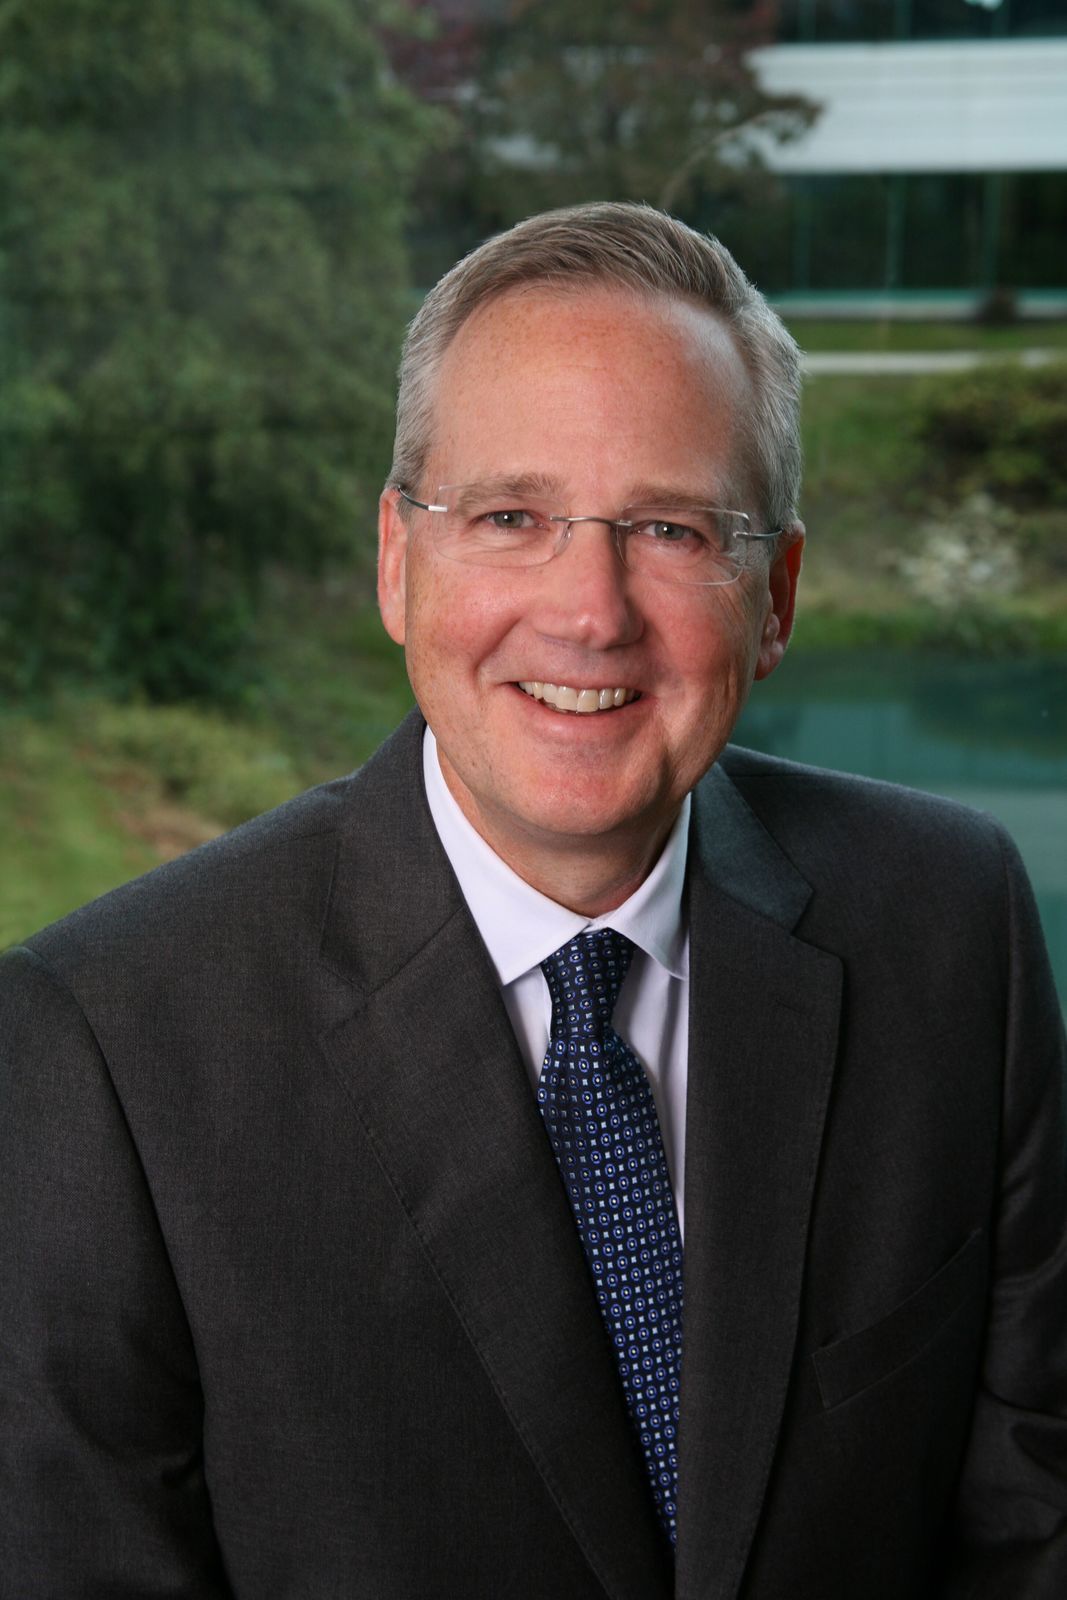 Jeff Morgan Stanley Managing Director